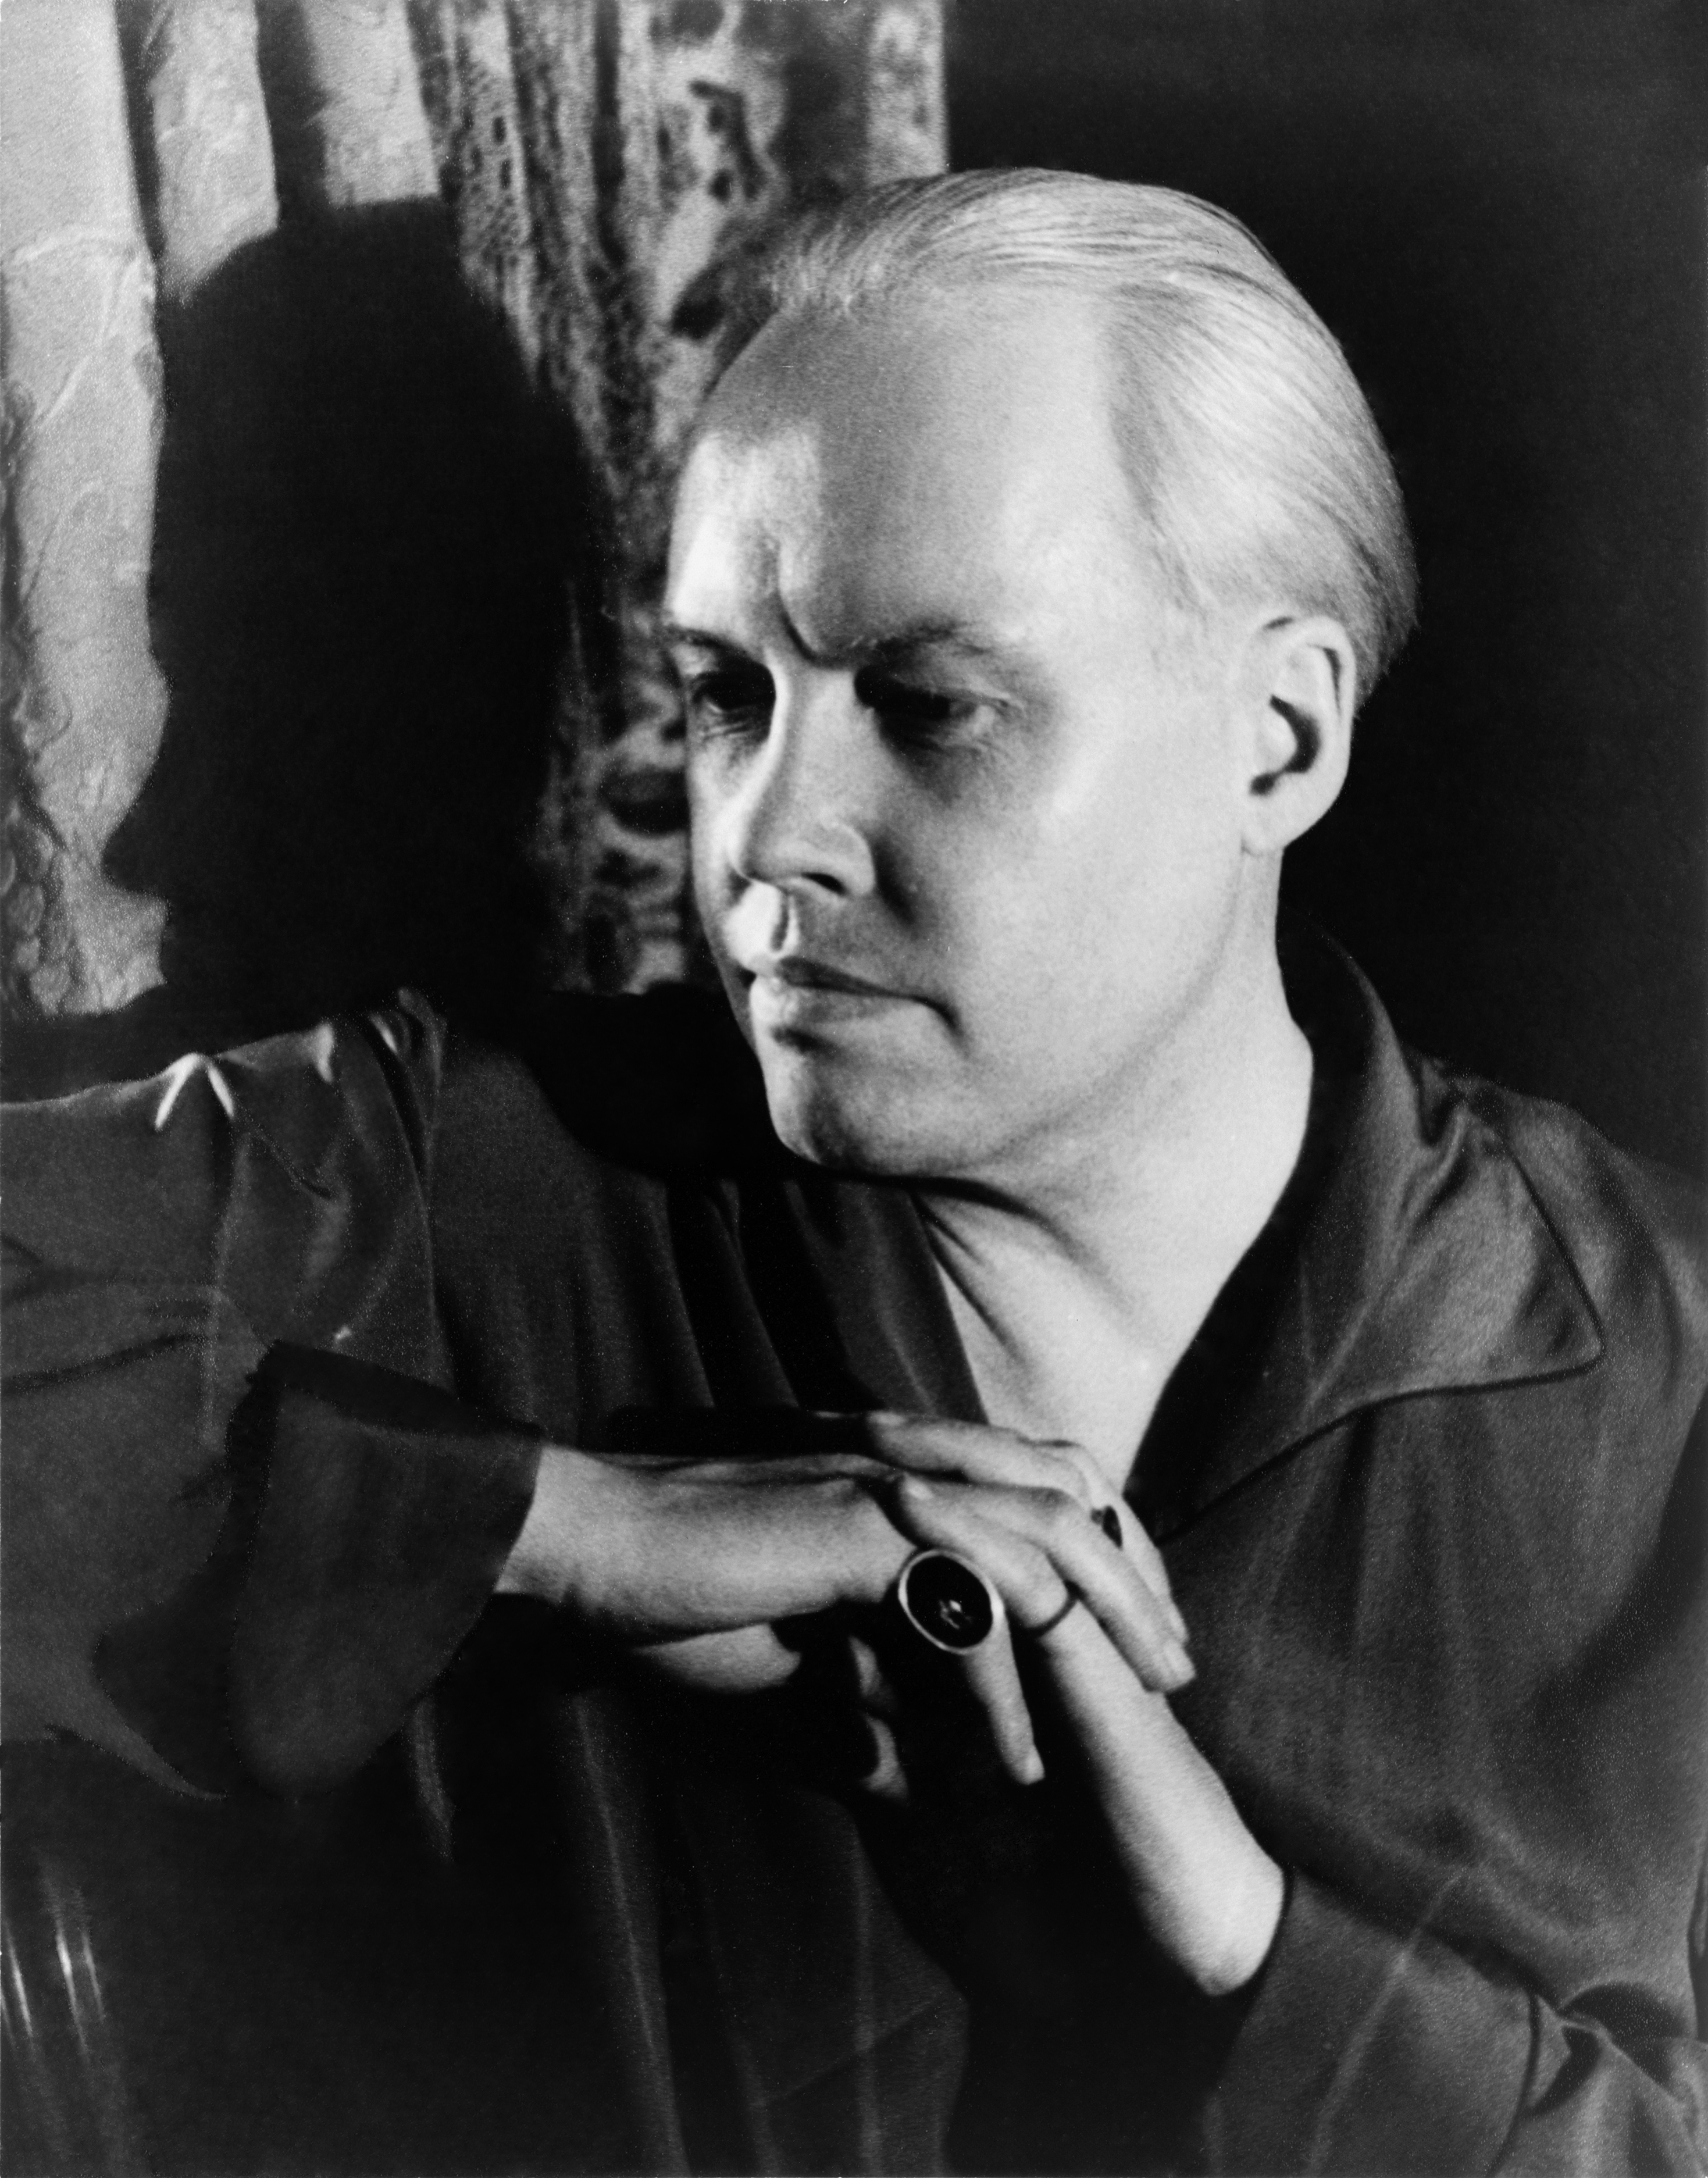 Self-portrait (1933)